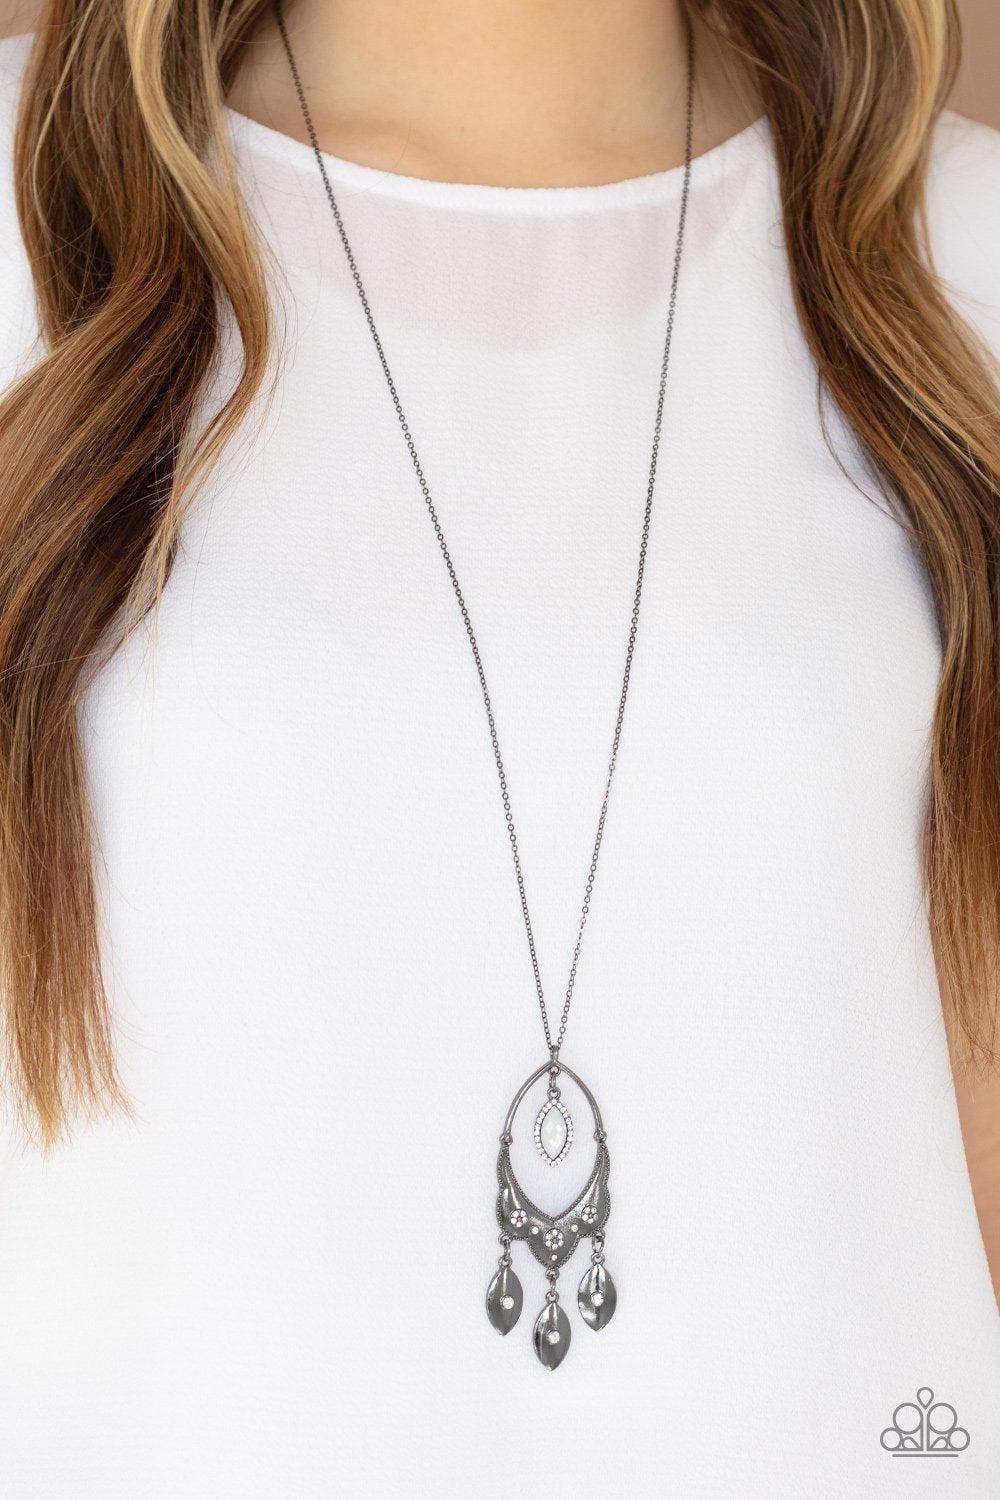 Royal Iridescence Gunmetal Black Necklace - Paparazzi Accessories - model -CarasShop.com - $5 Jewelry by Cara Jewels